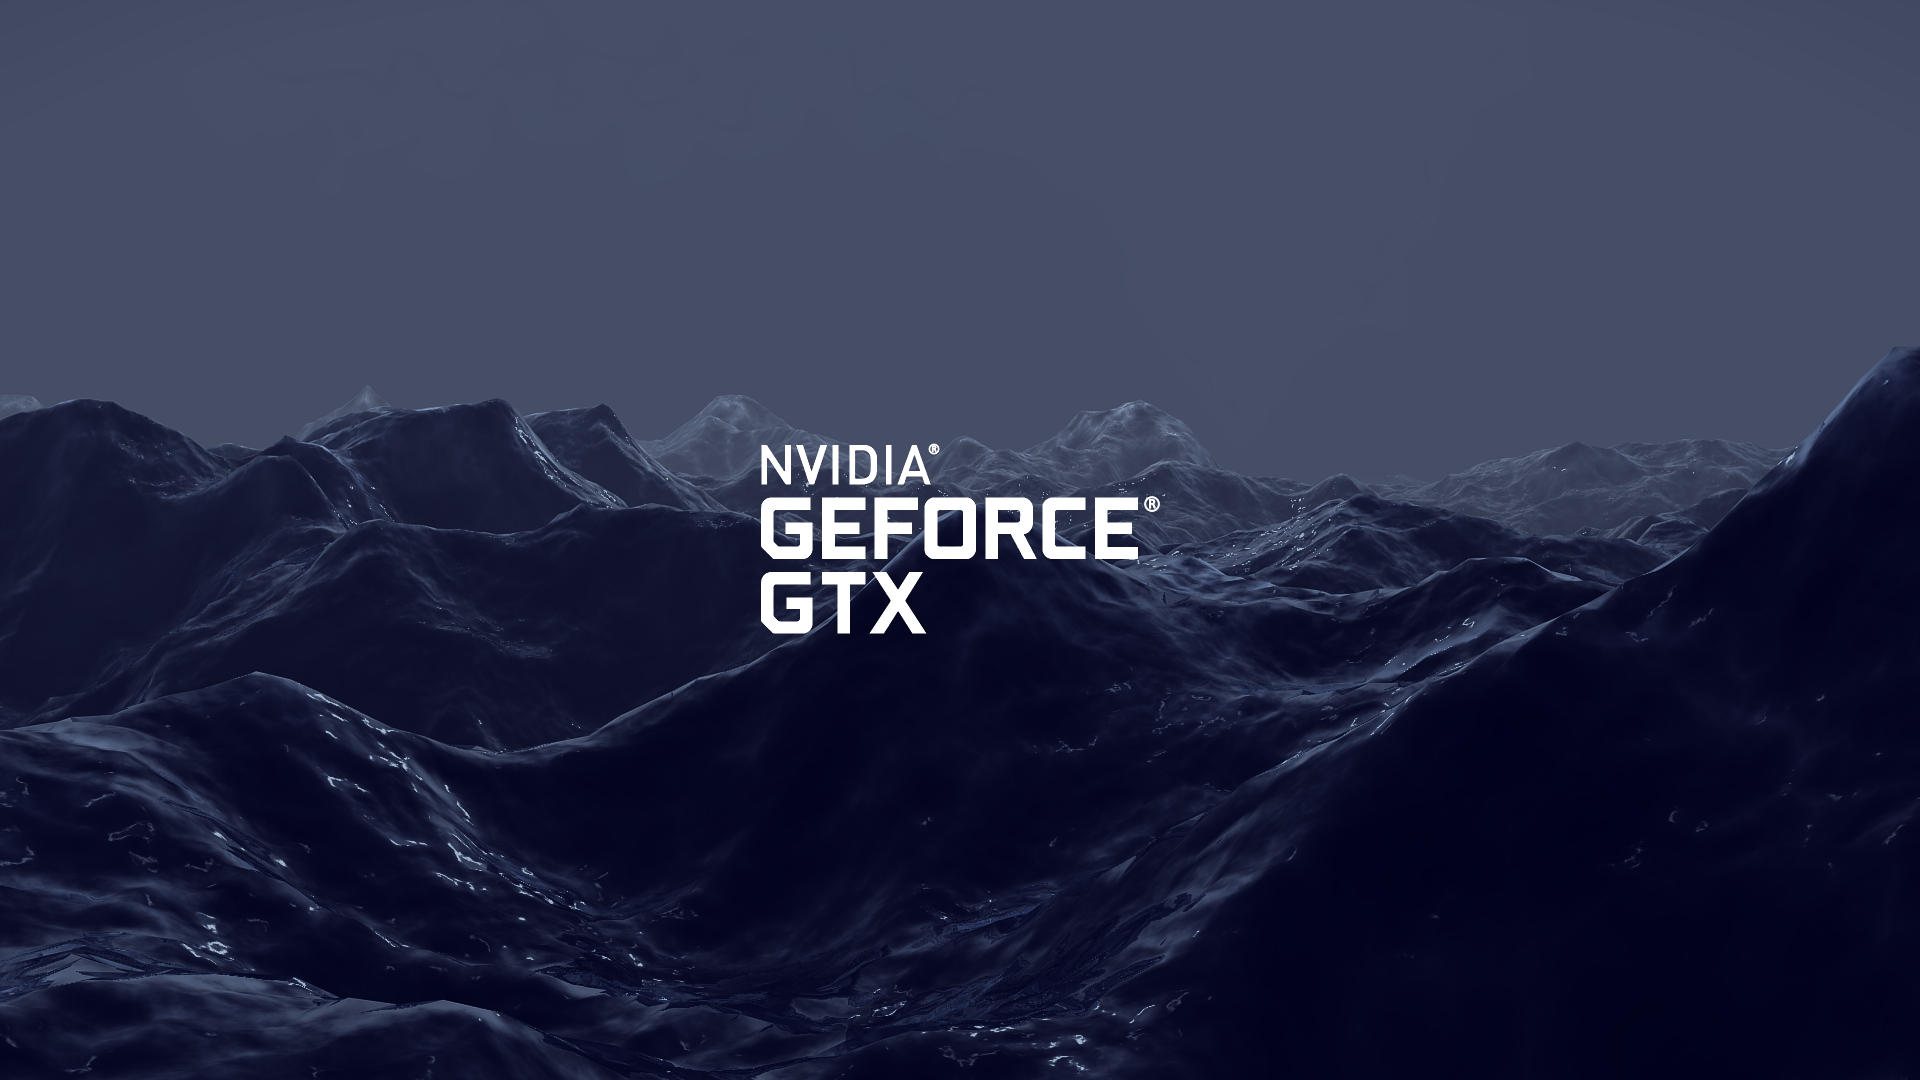 Gtx 960 Msi 1 Source Nvidia Geforce Gtx Hd Wallpaper Backgrounds Download